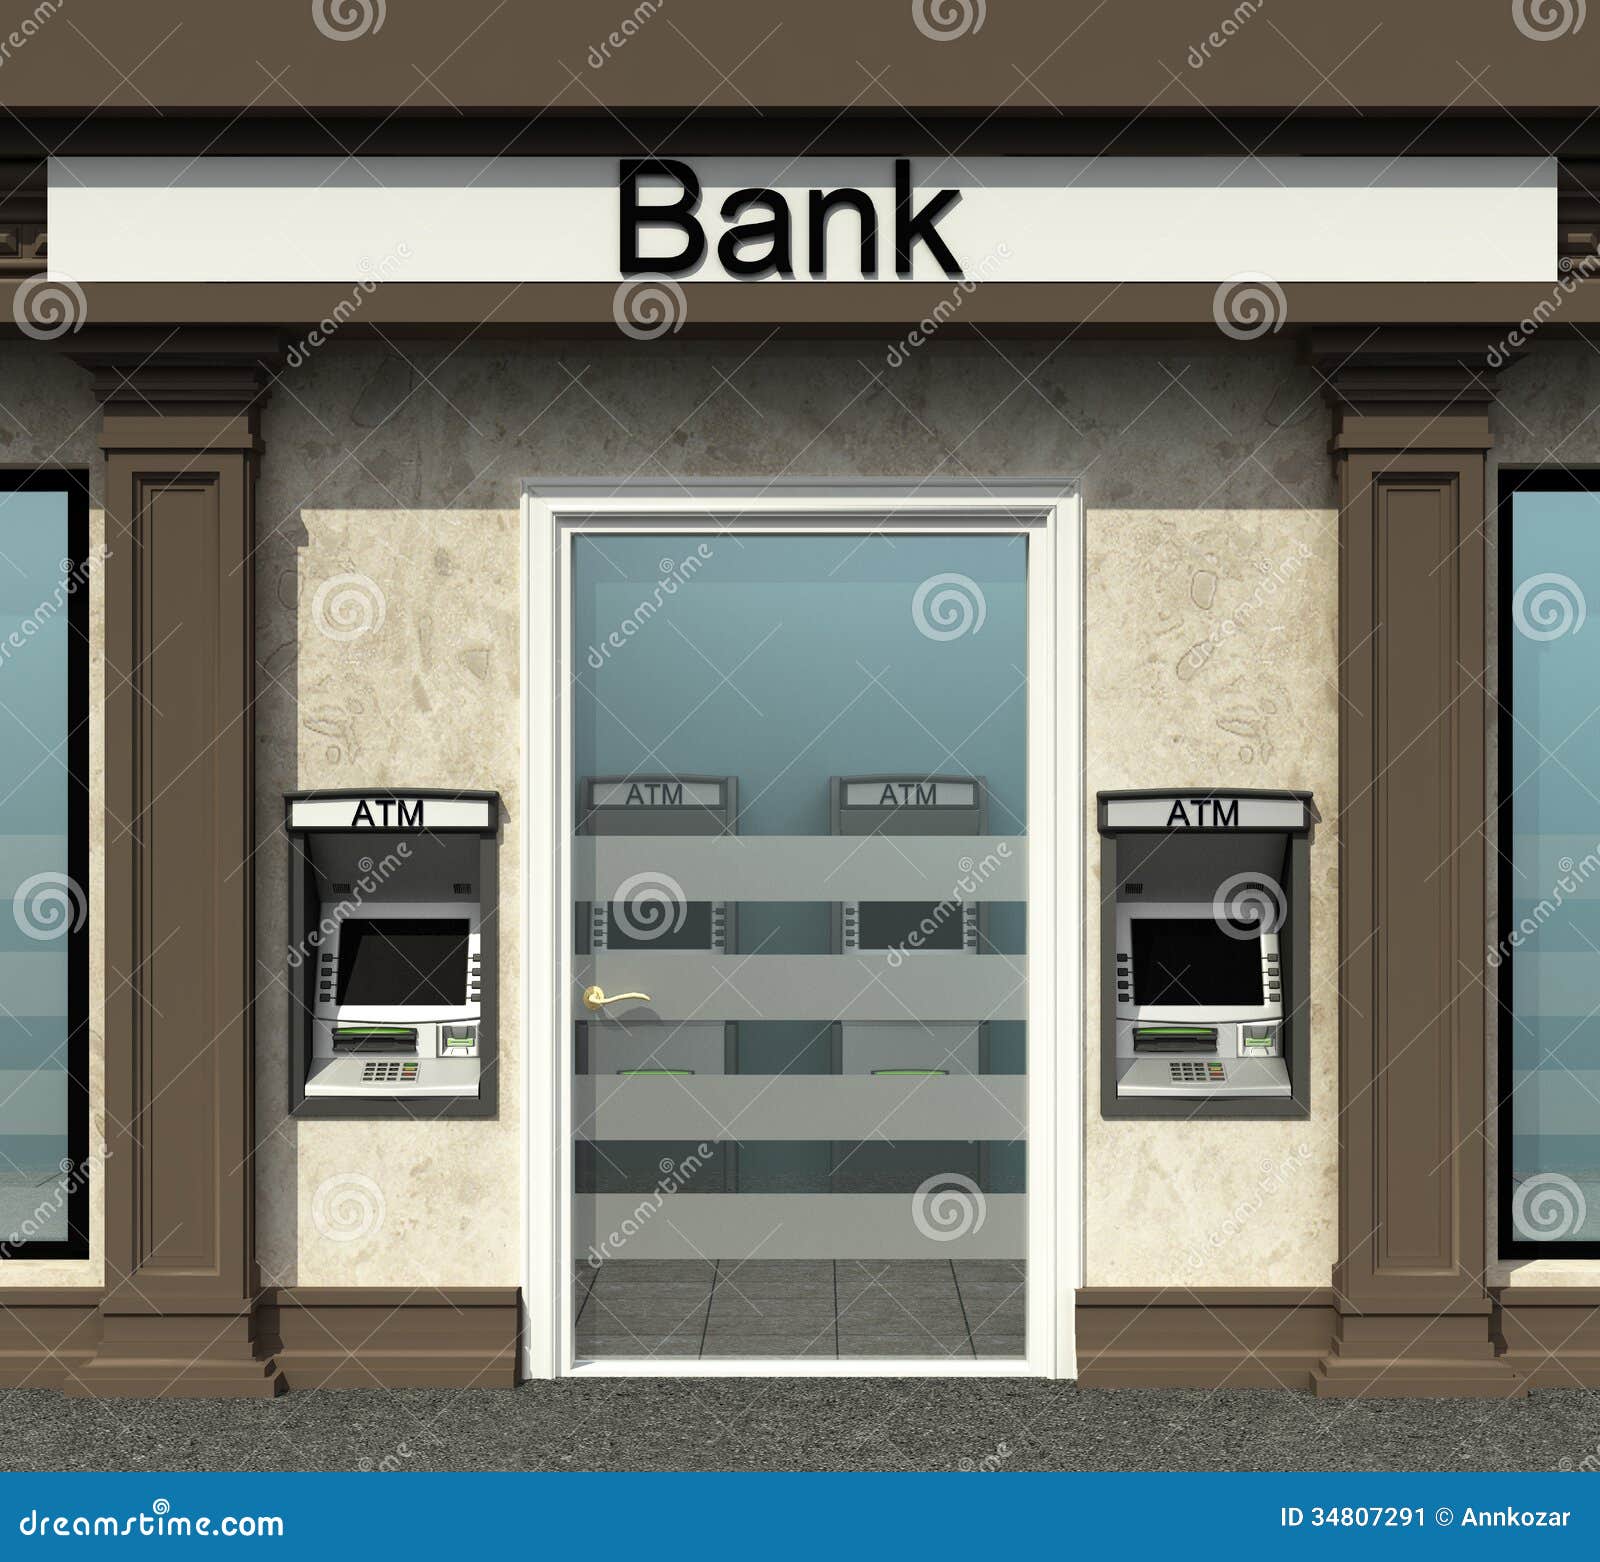 bank branch clip art - photo #32